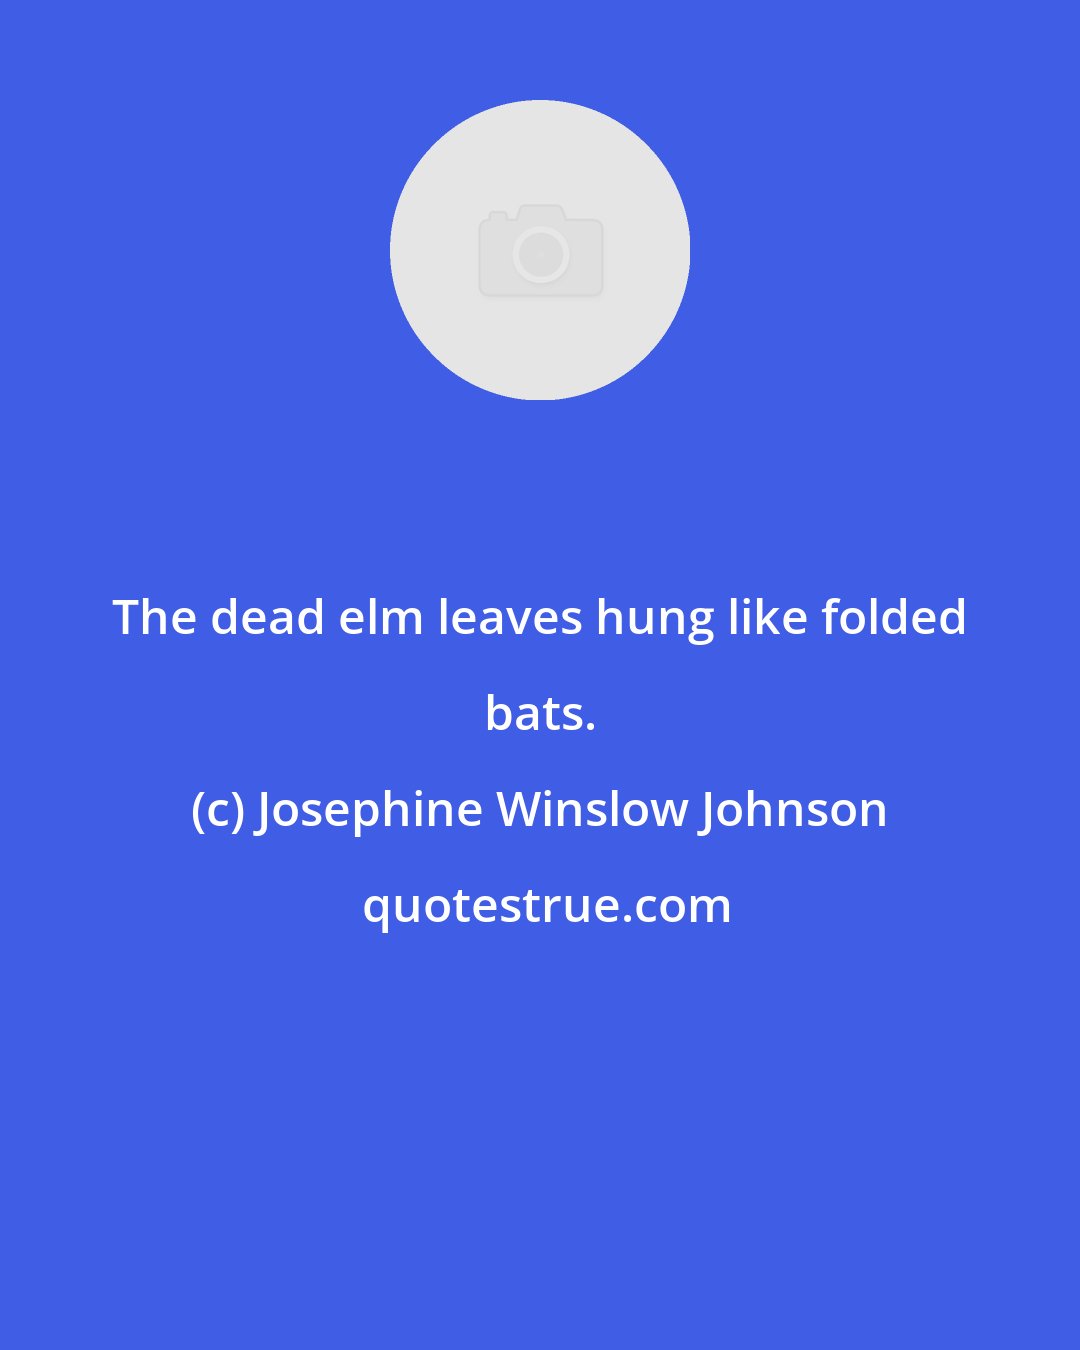 Josephine Winslow Johnson: The dead elm leaves hung like folded bats.